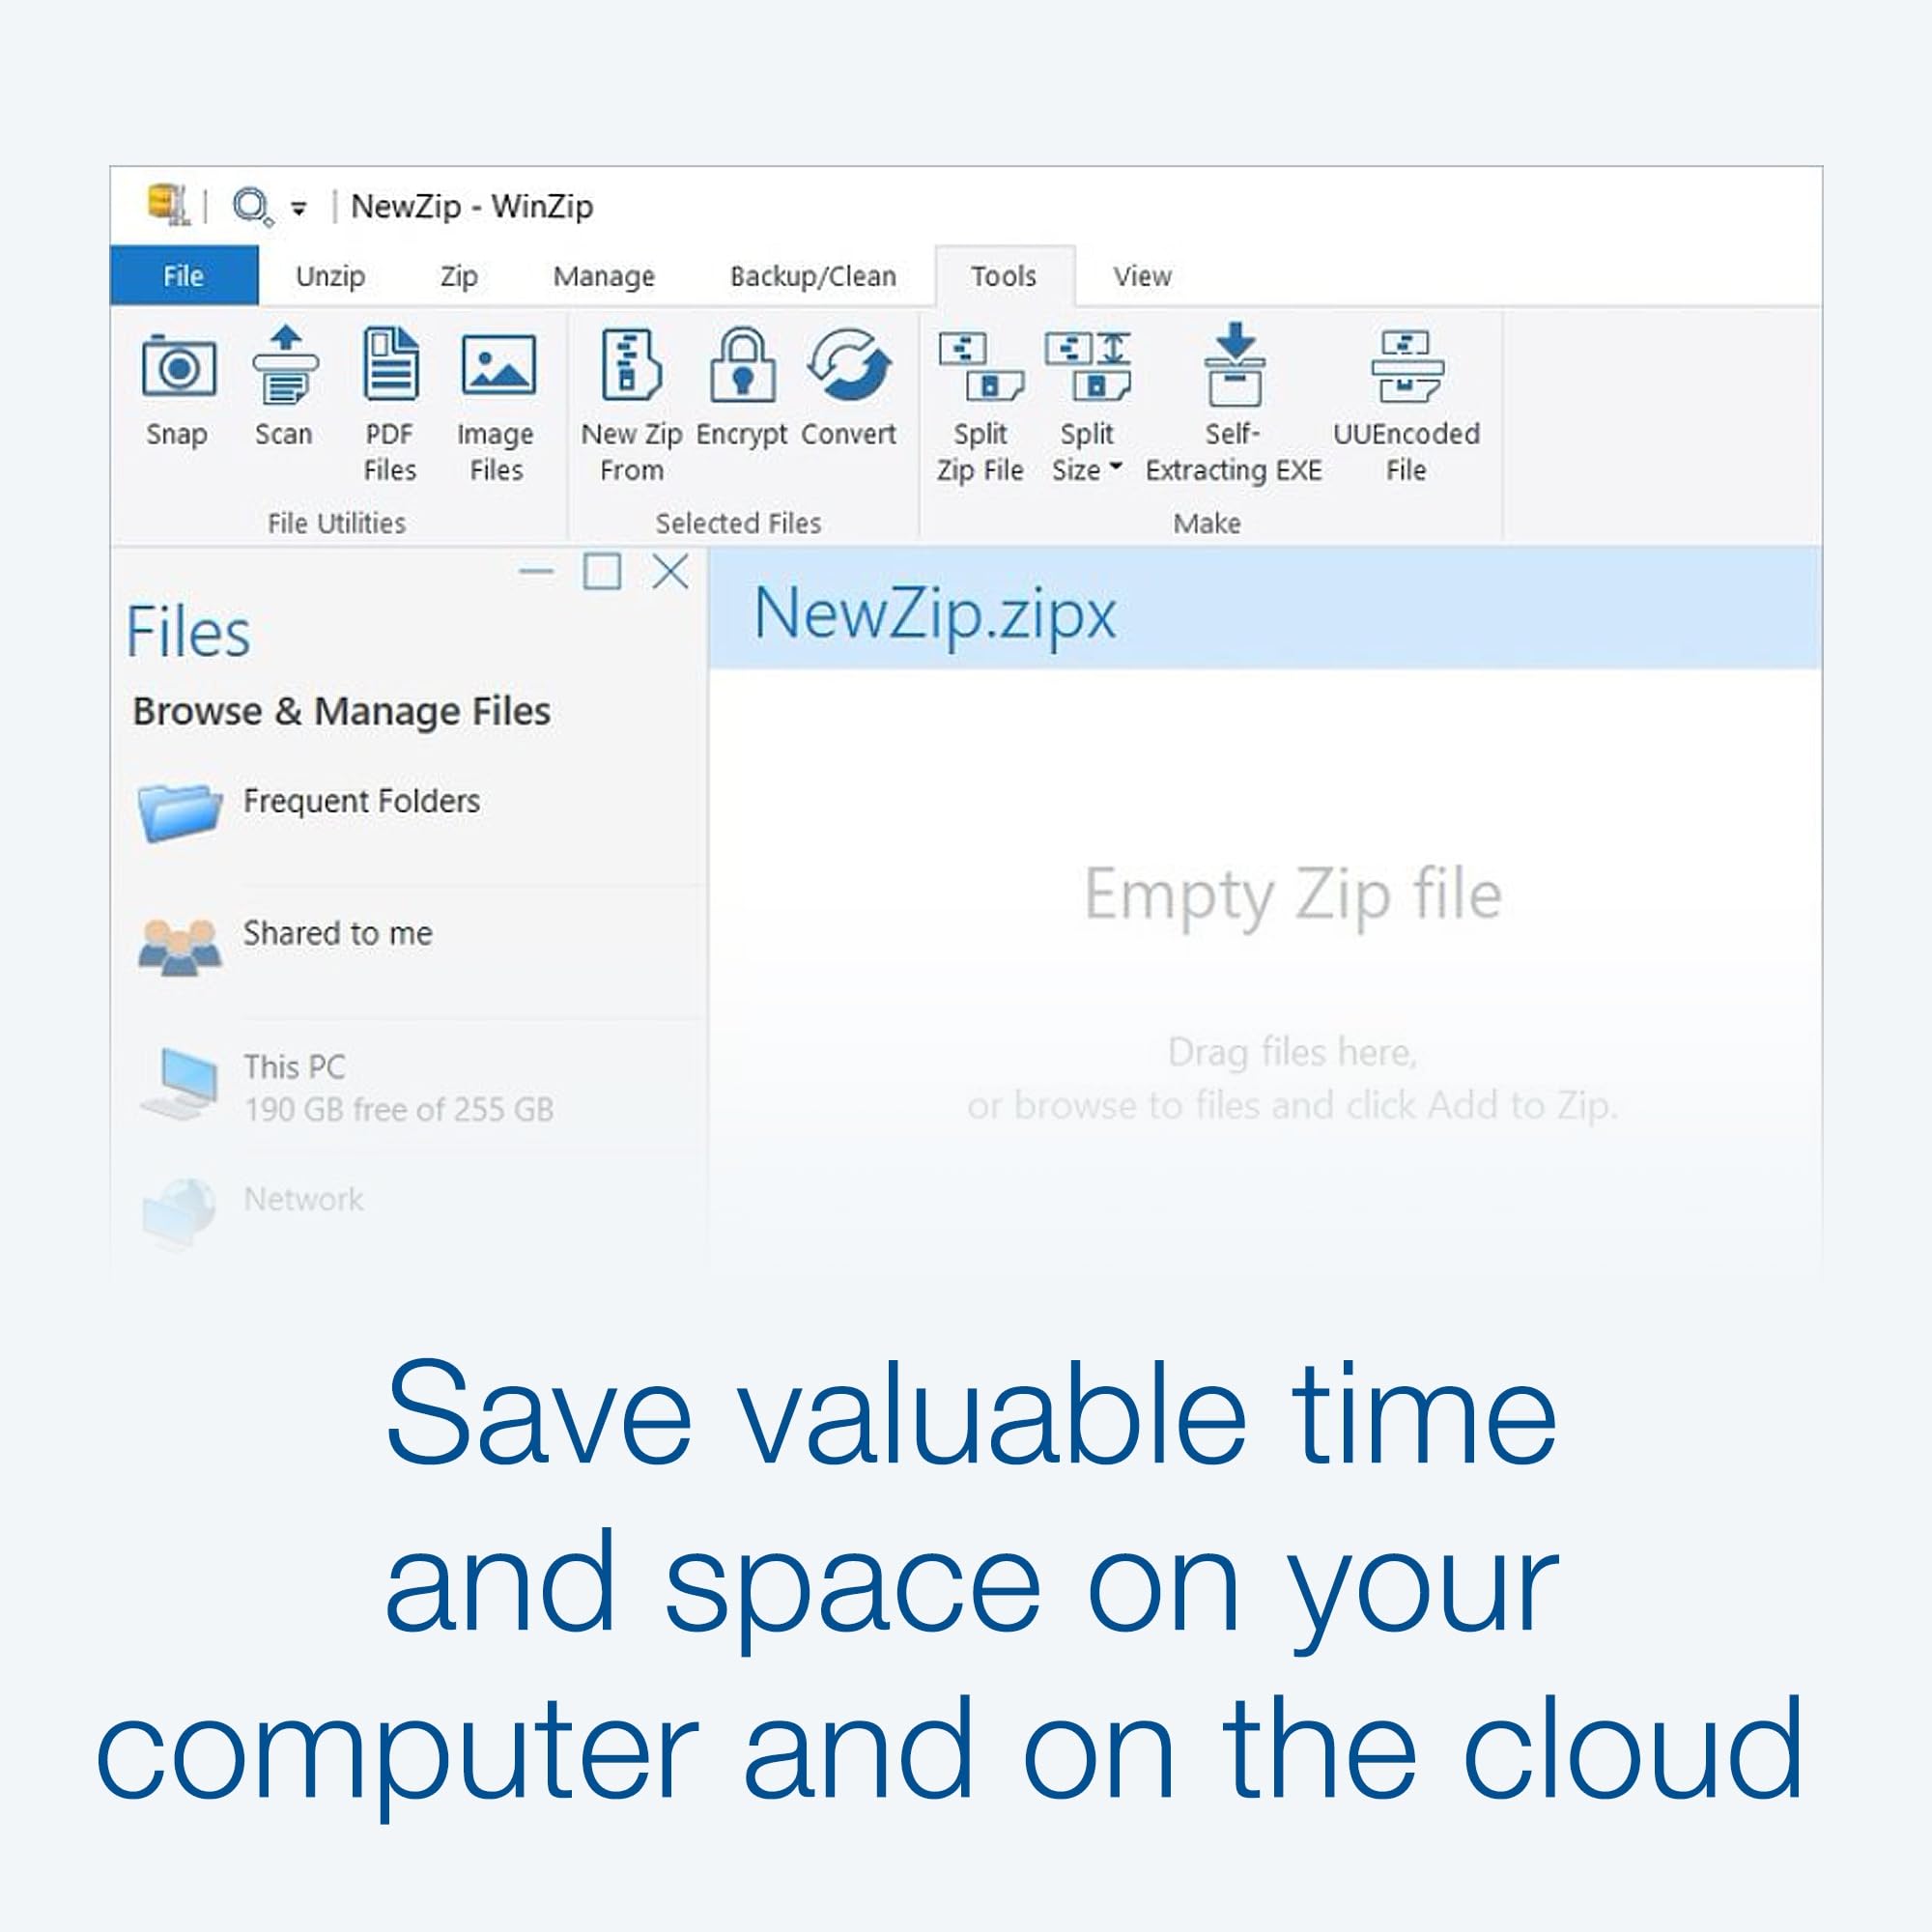 WinZip 28 | File Management, Encryption & Compression Software [PC Download]